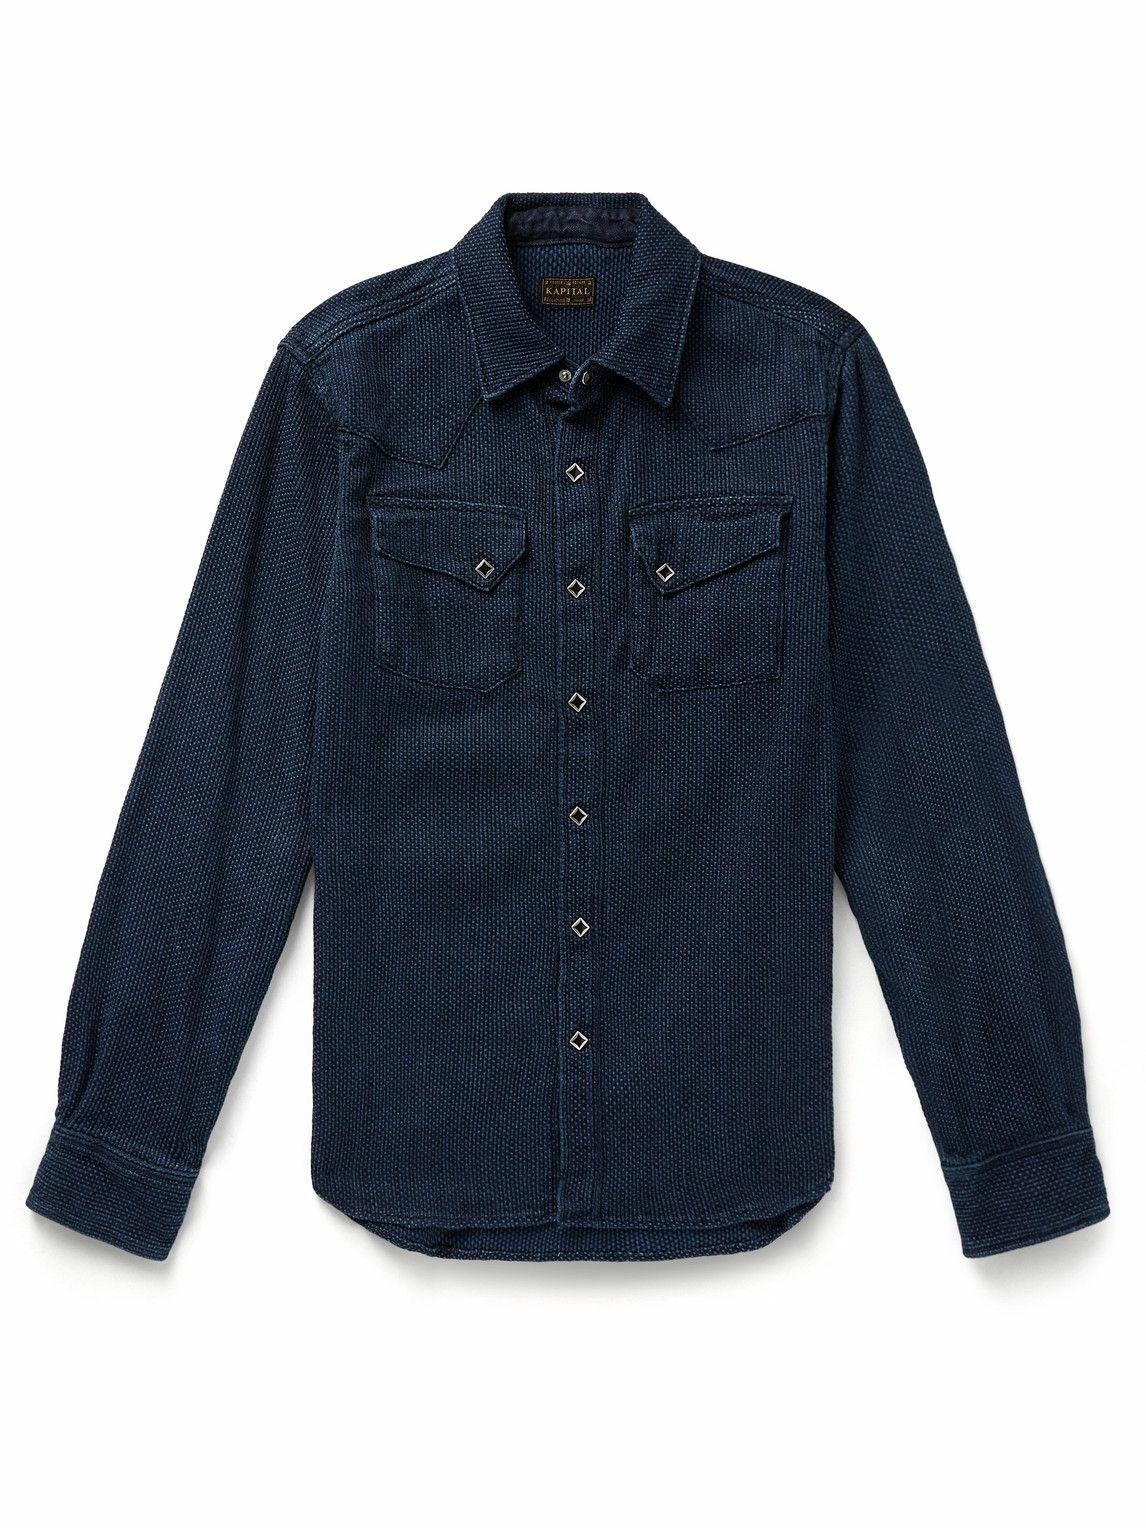 KAPITAL - Indigo-Dyed Textured-Cotton Western Shirt - Blue KAPITAL